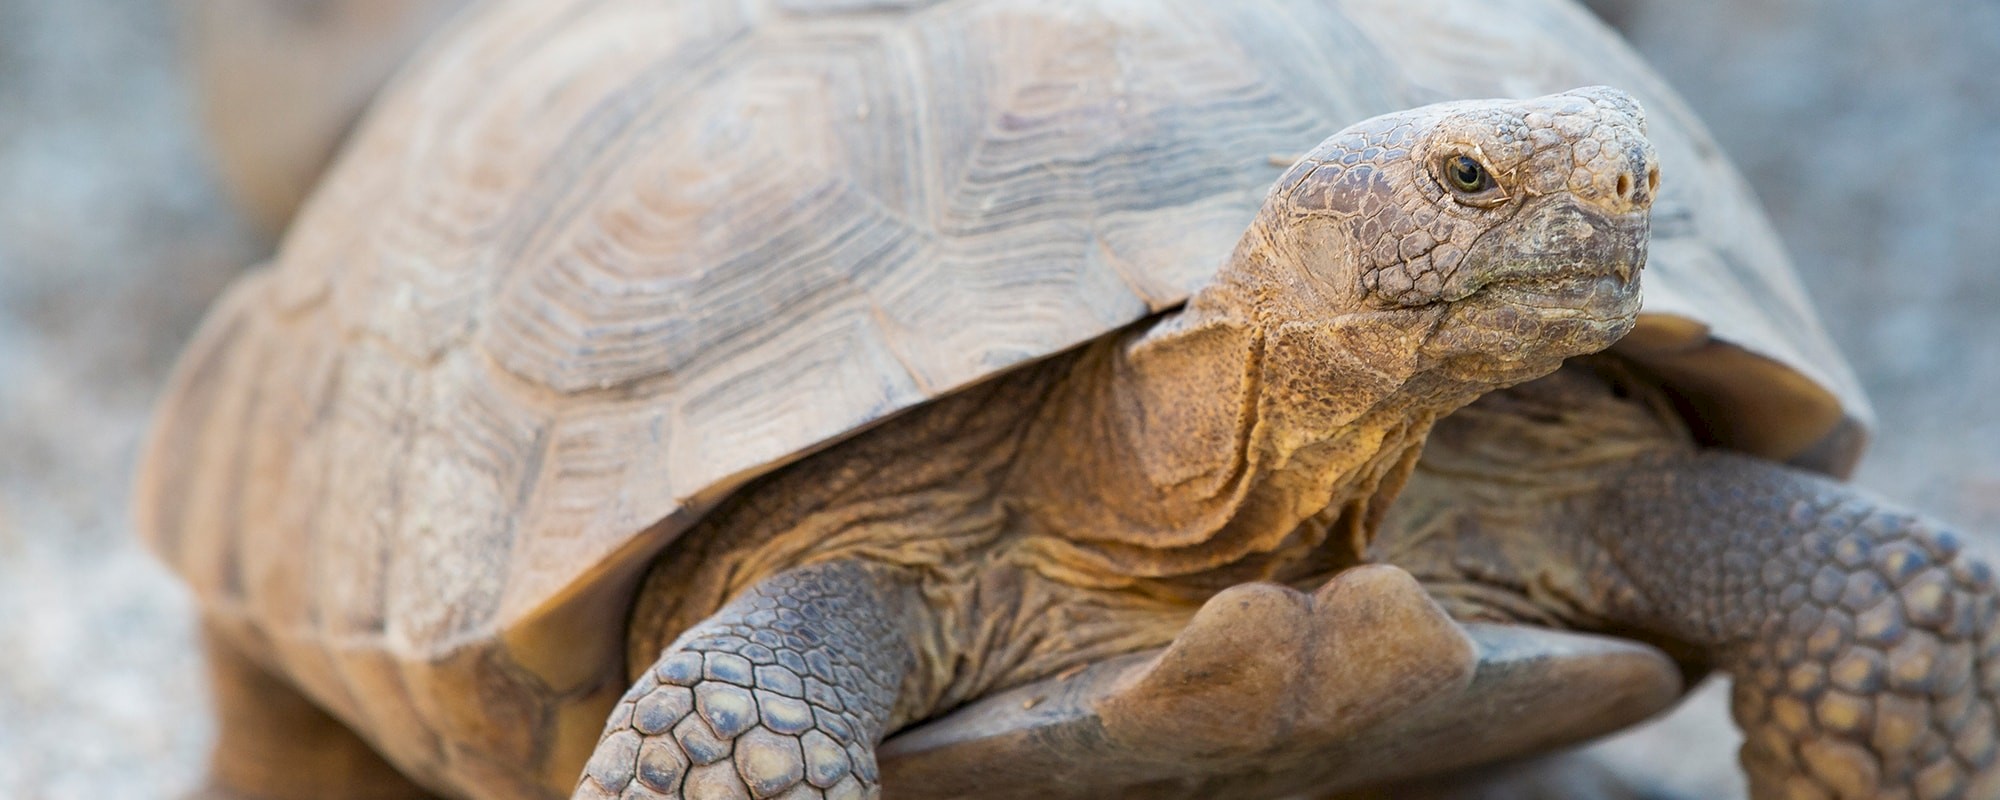 Desert tortoise education resources at The Living Desert Zoo and Gardens.